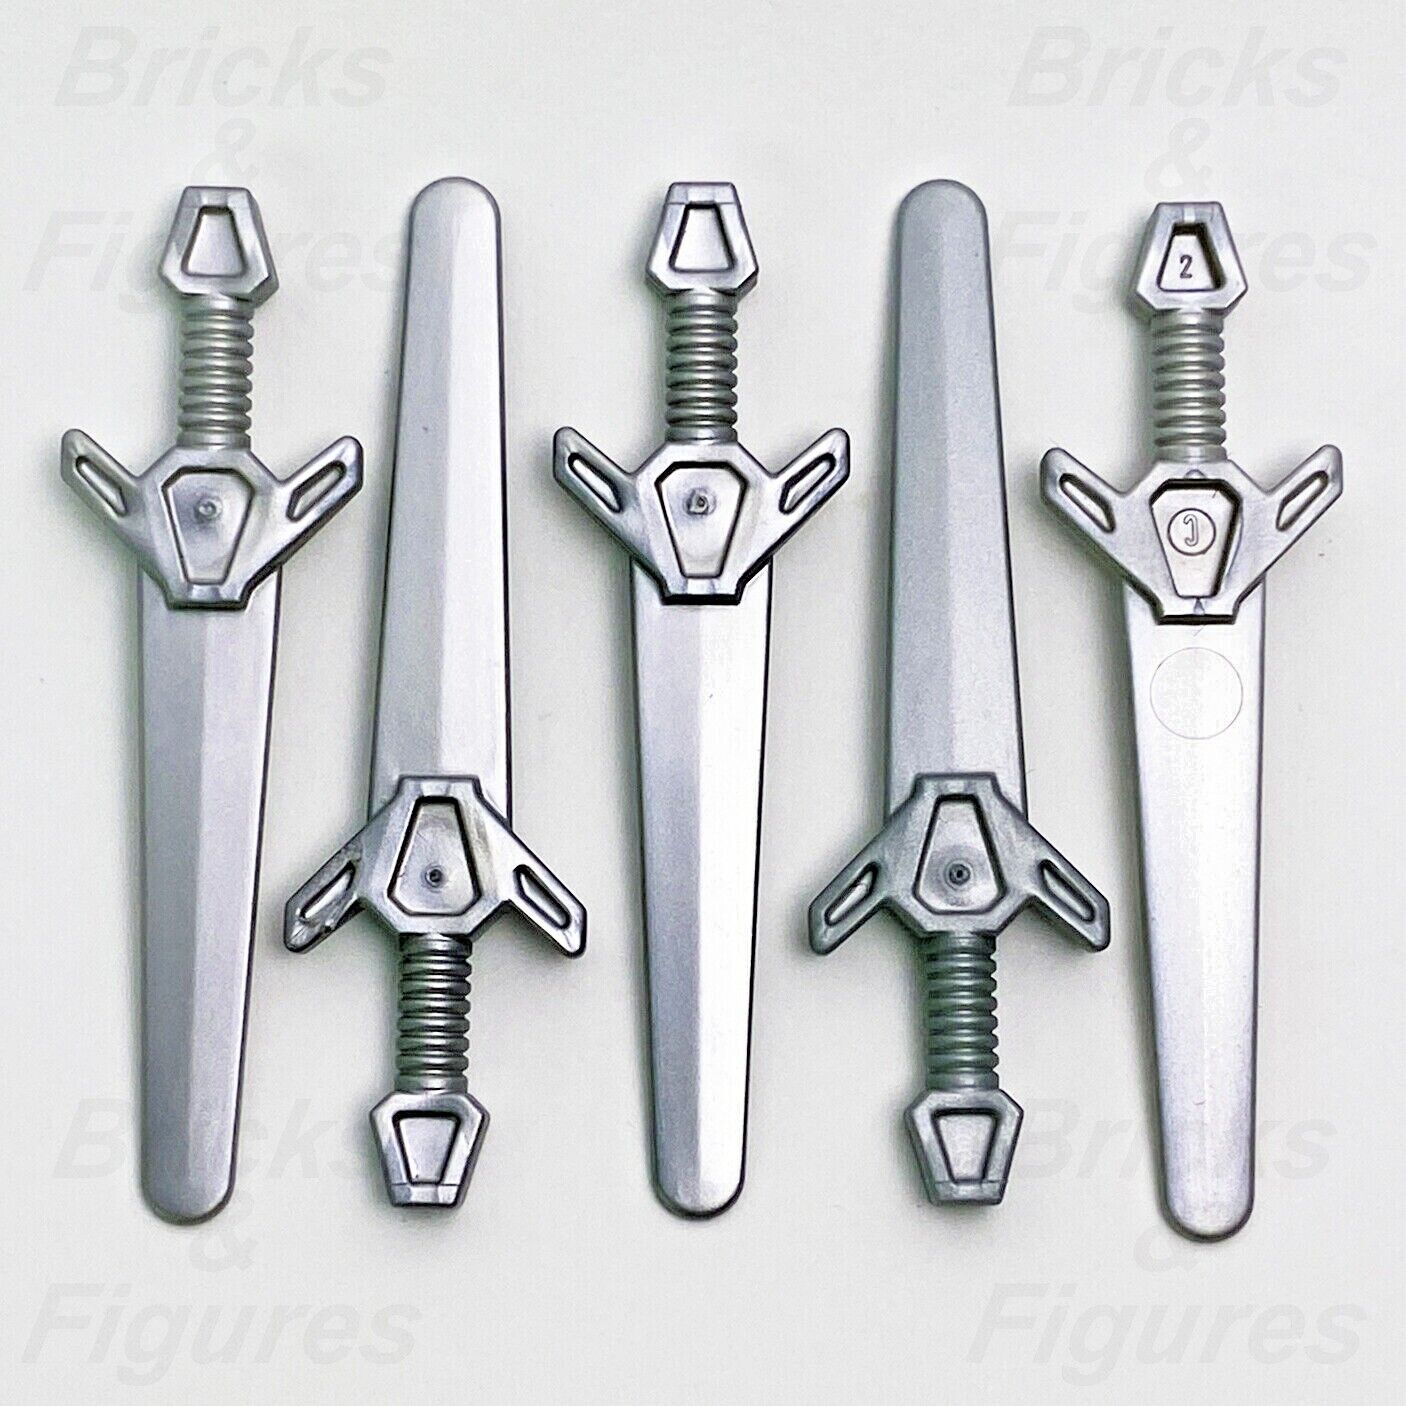 5 x LEGO Flat Silver Greatsword Swords Blades Minifigure Weapon Parts 48495 - Bricks & Figures